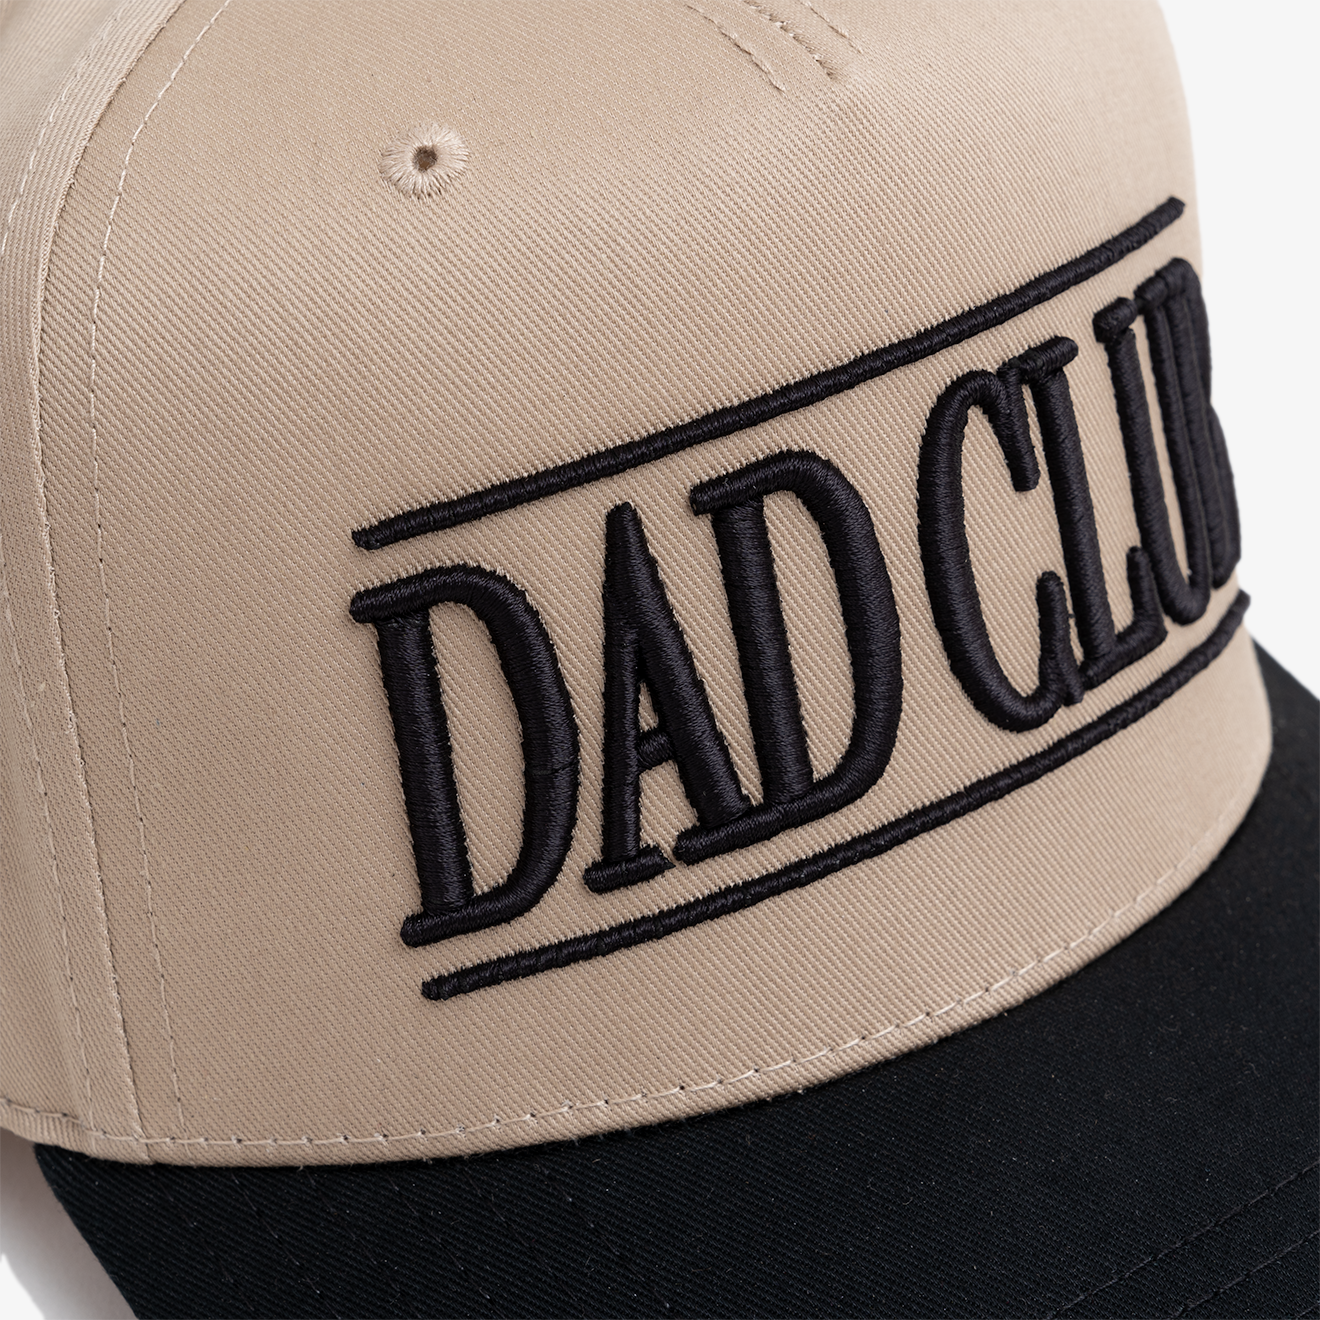 Dad Club (Khaki/Black)